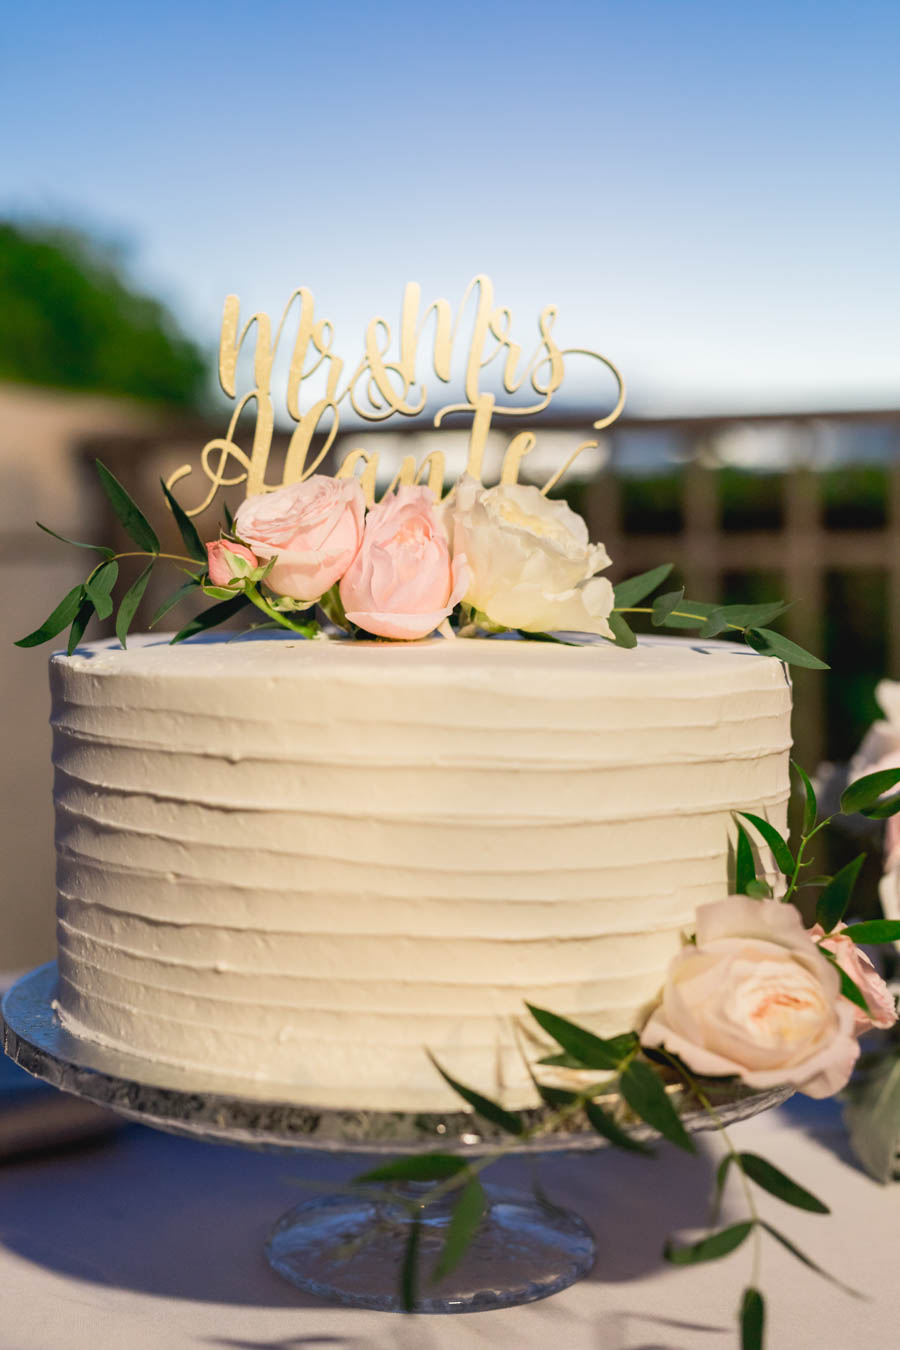 Maui wedding cakes, Tropical wedding cake, Wedding cakes with flowers